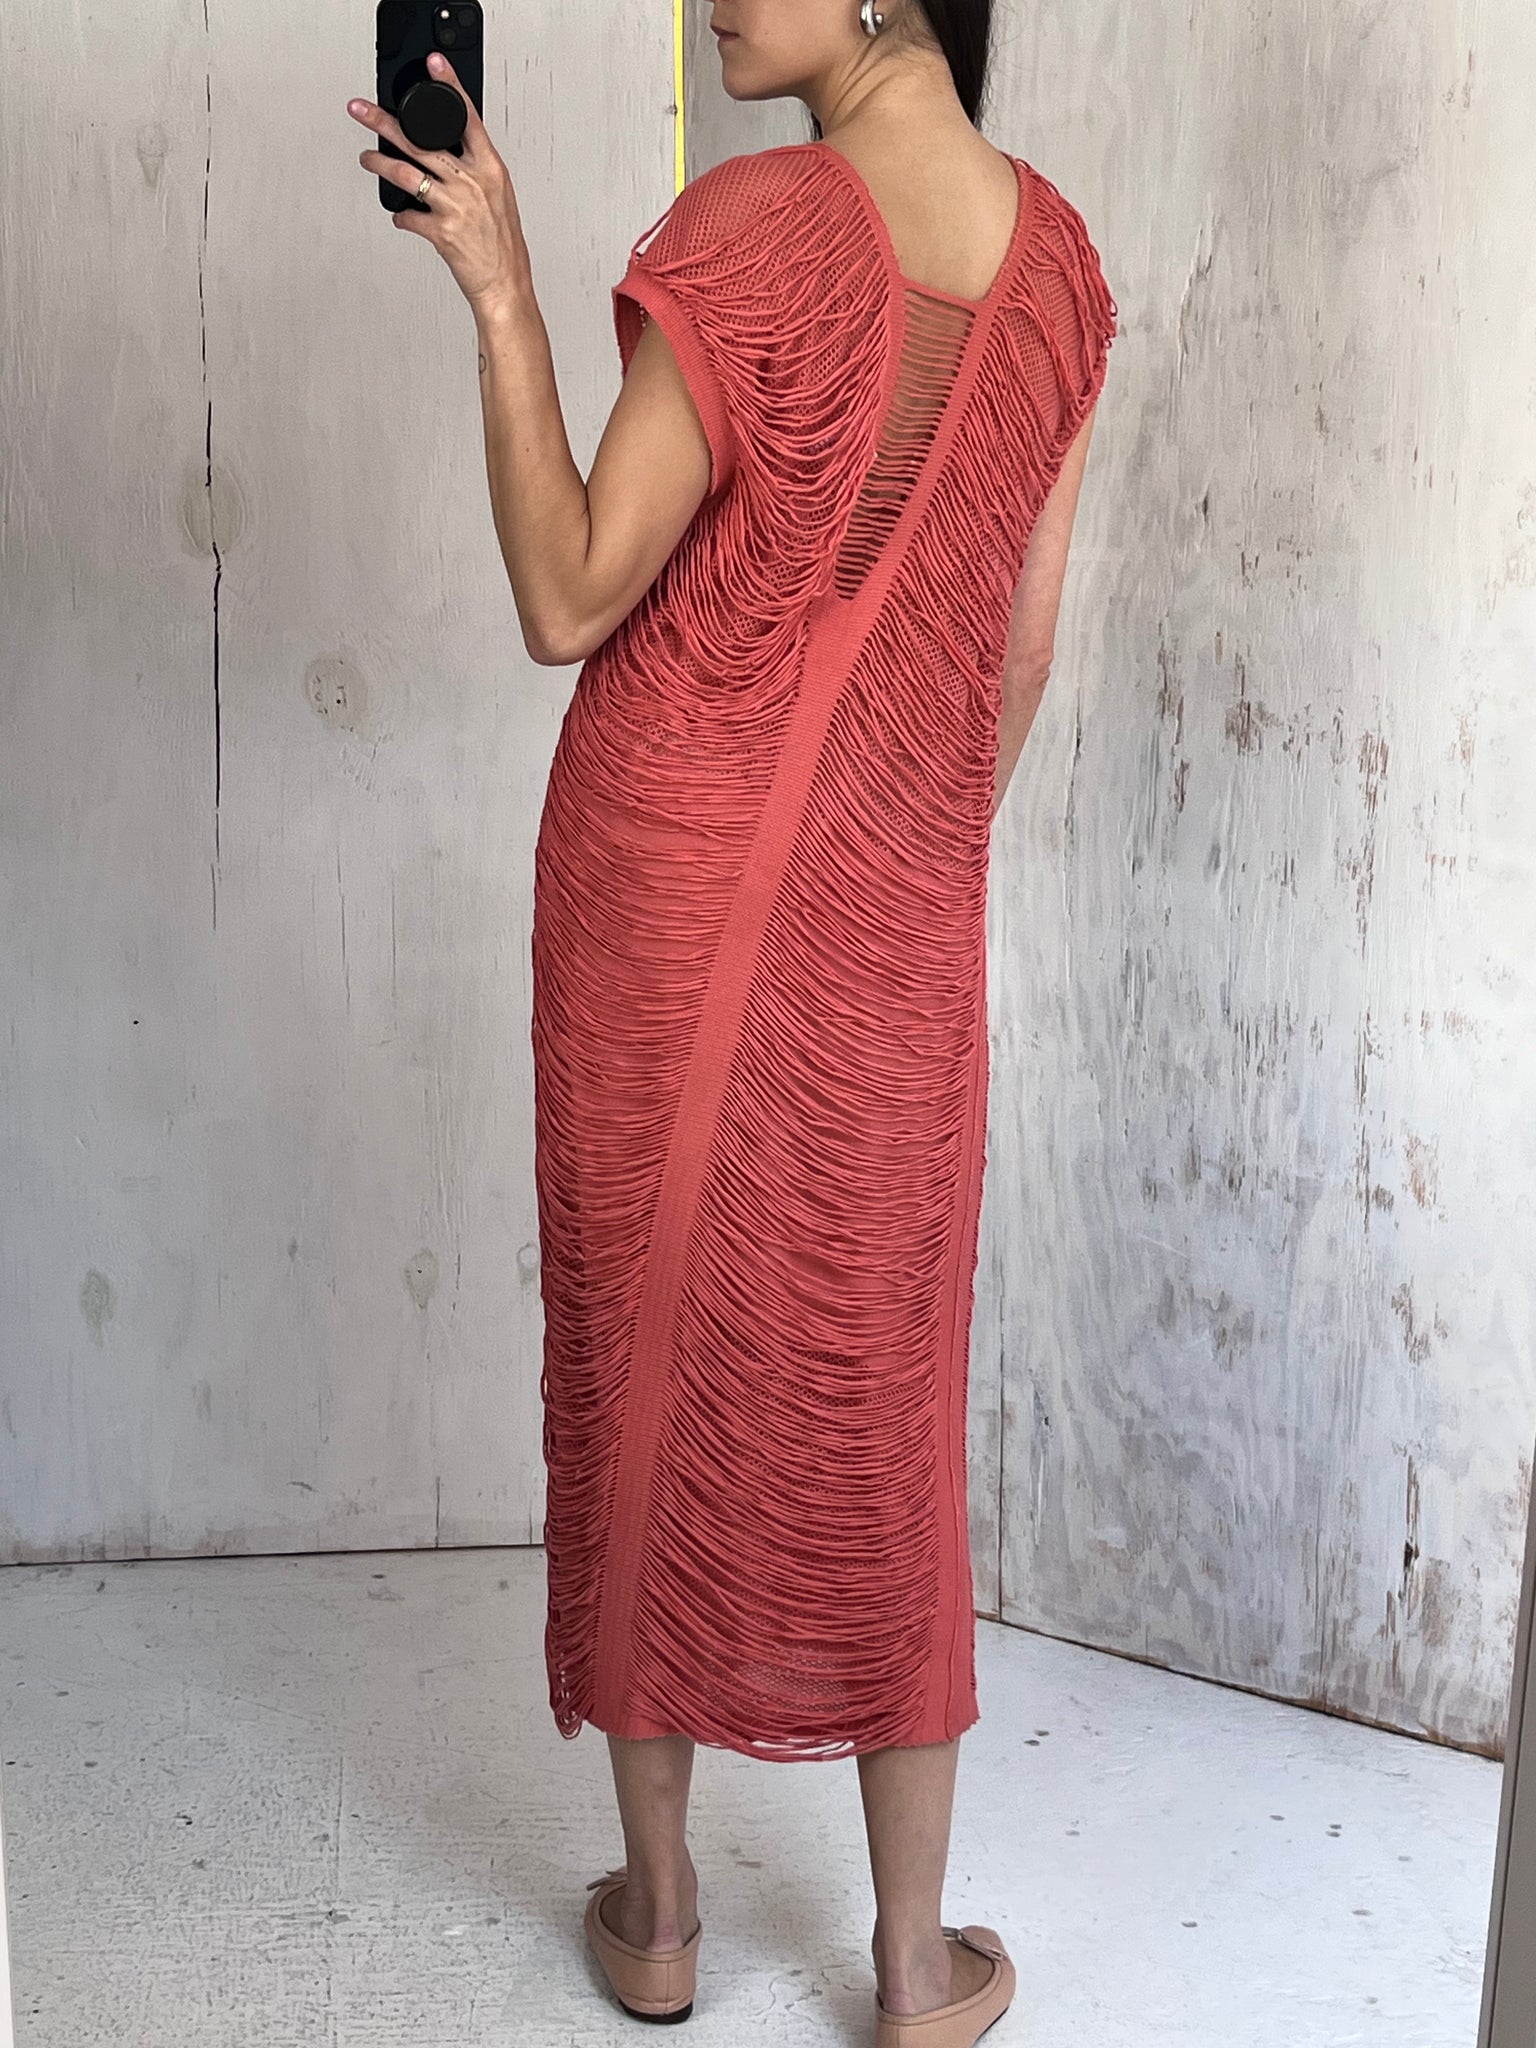 Issey Miyake, Distressed Knit Dress, 2000s